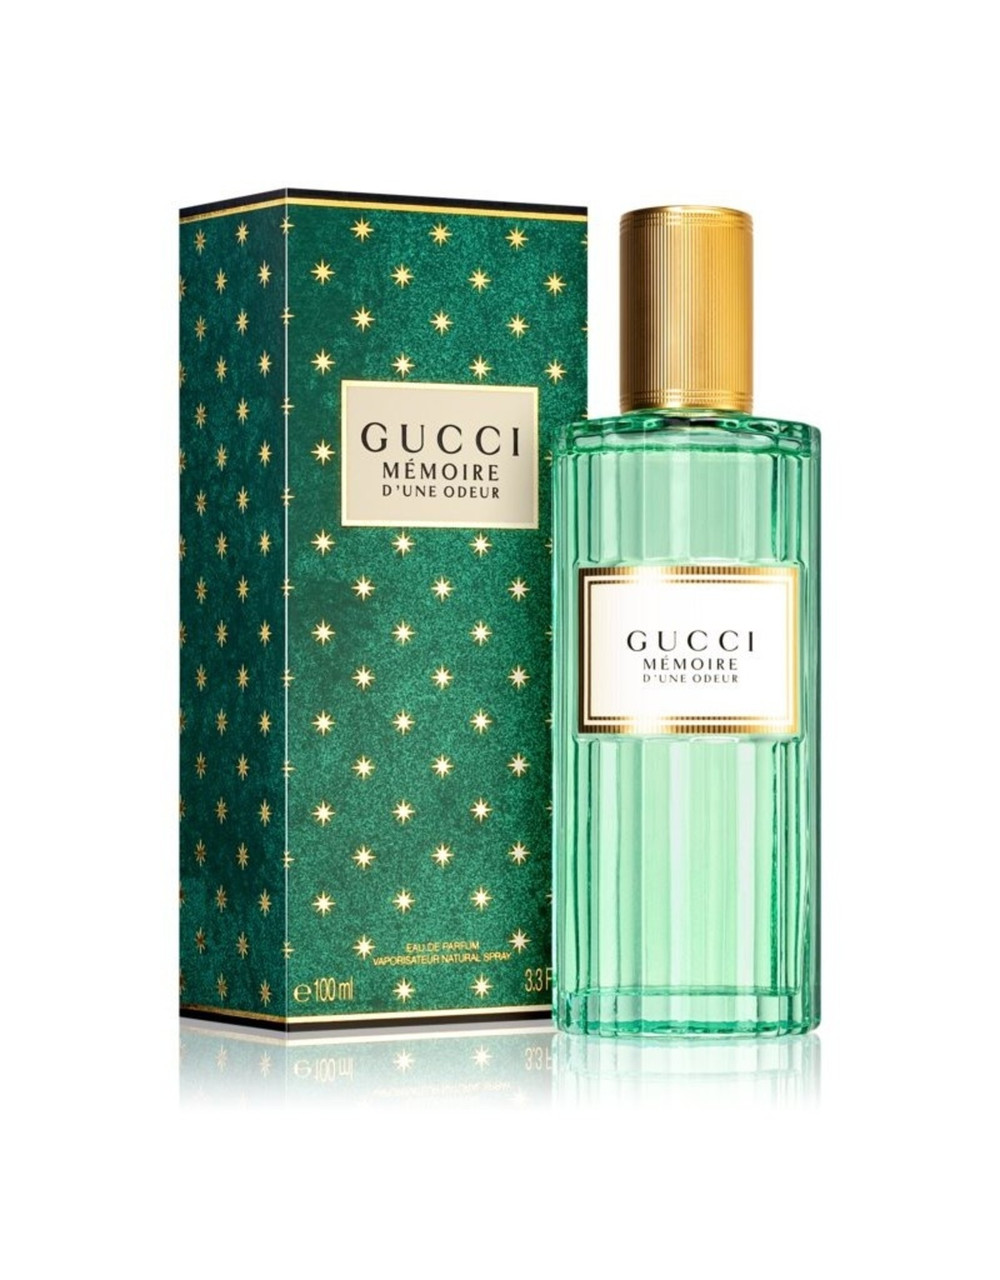 Унисекс парфюмированная вода Gucci Memoire d’une Odeur edp 100ml